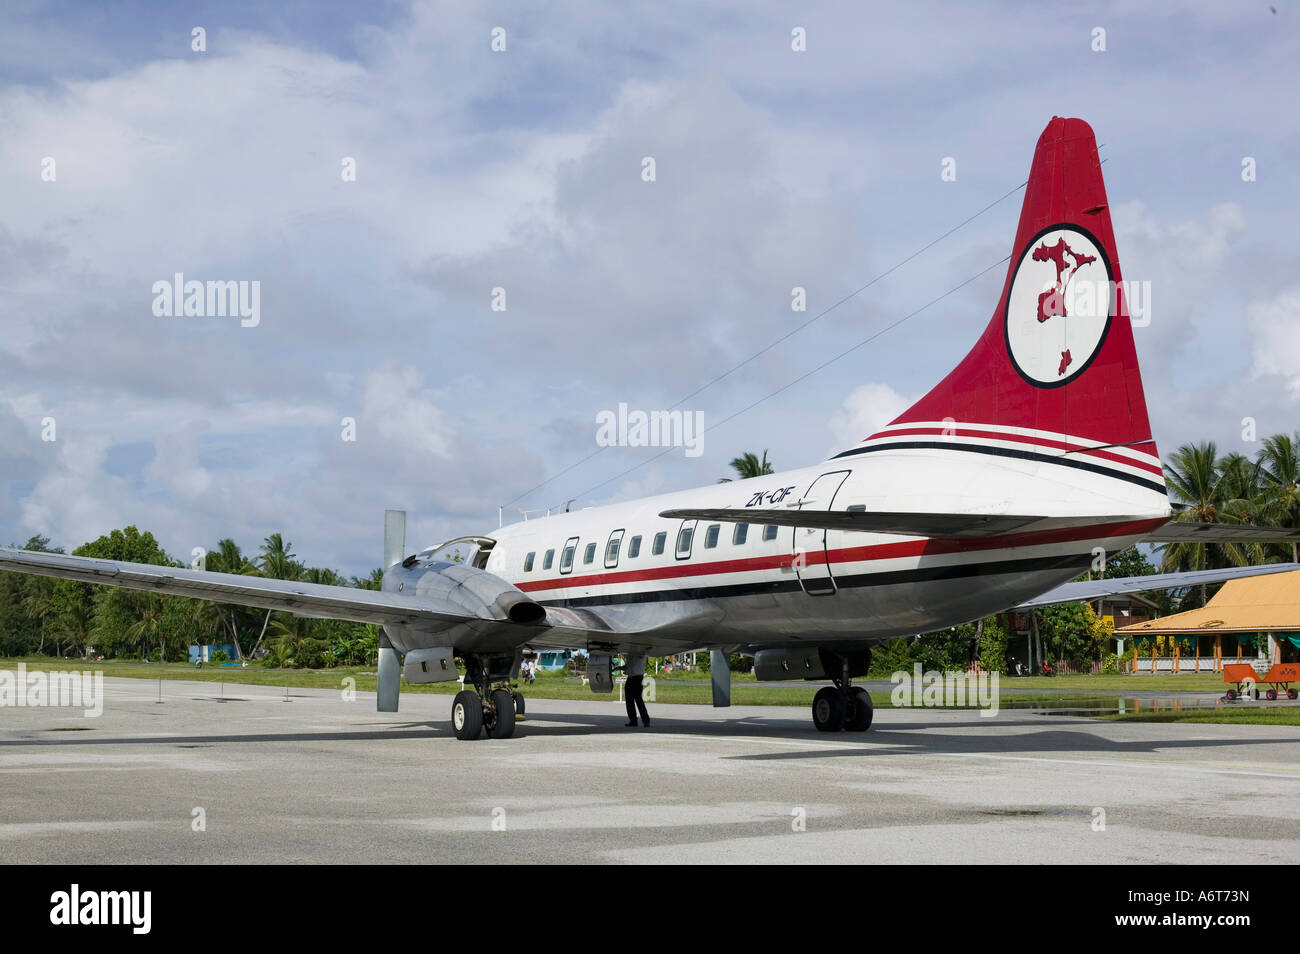 A plane on the runway at funafuti, Tuvalu, pacific Stock Photo